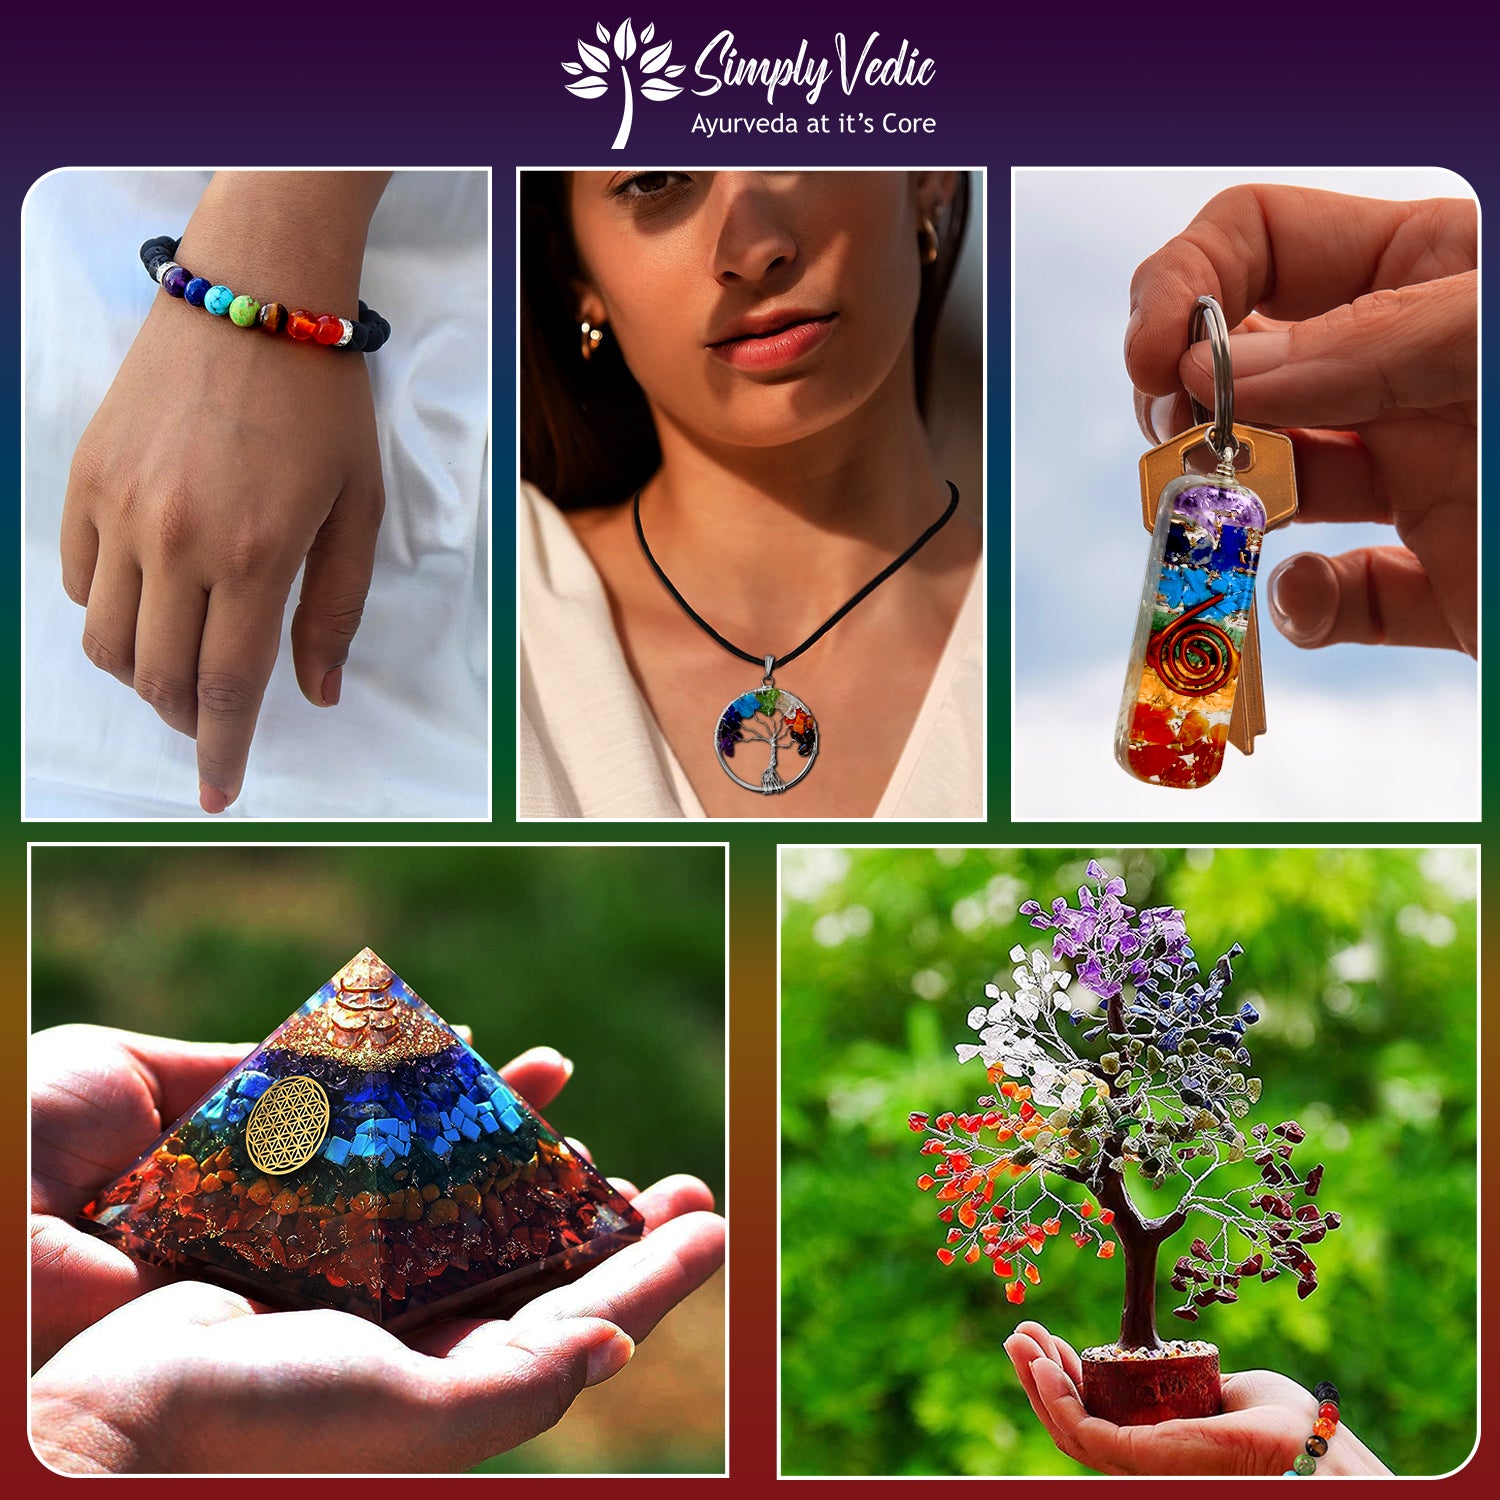 Simply Vedic 7 Chakra Crystal Tree of Life+ Chakra Keychain| for Chakra Activation, Positive Energy, Good Luck| Natural Healing Gemstones MoneyTree Feng Shui, Spiritual Gift, Home Decor| Handmade simplyvedic